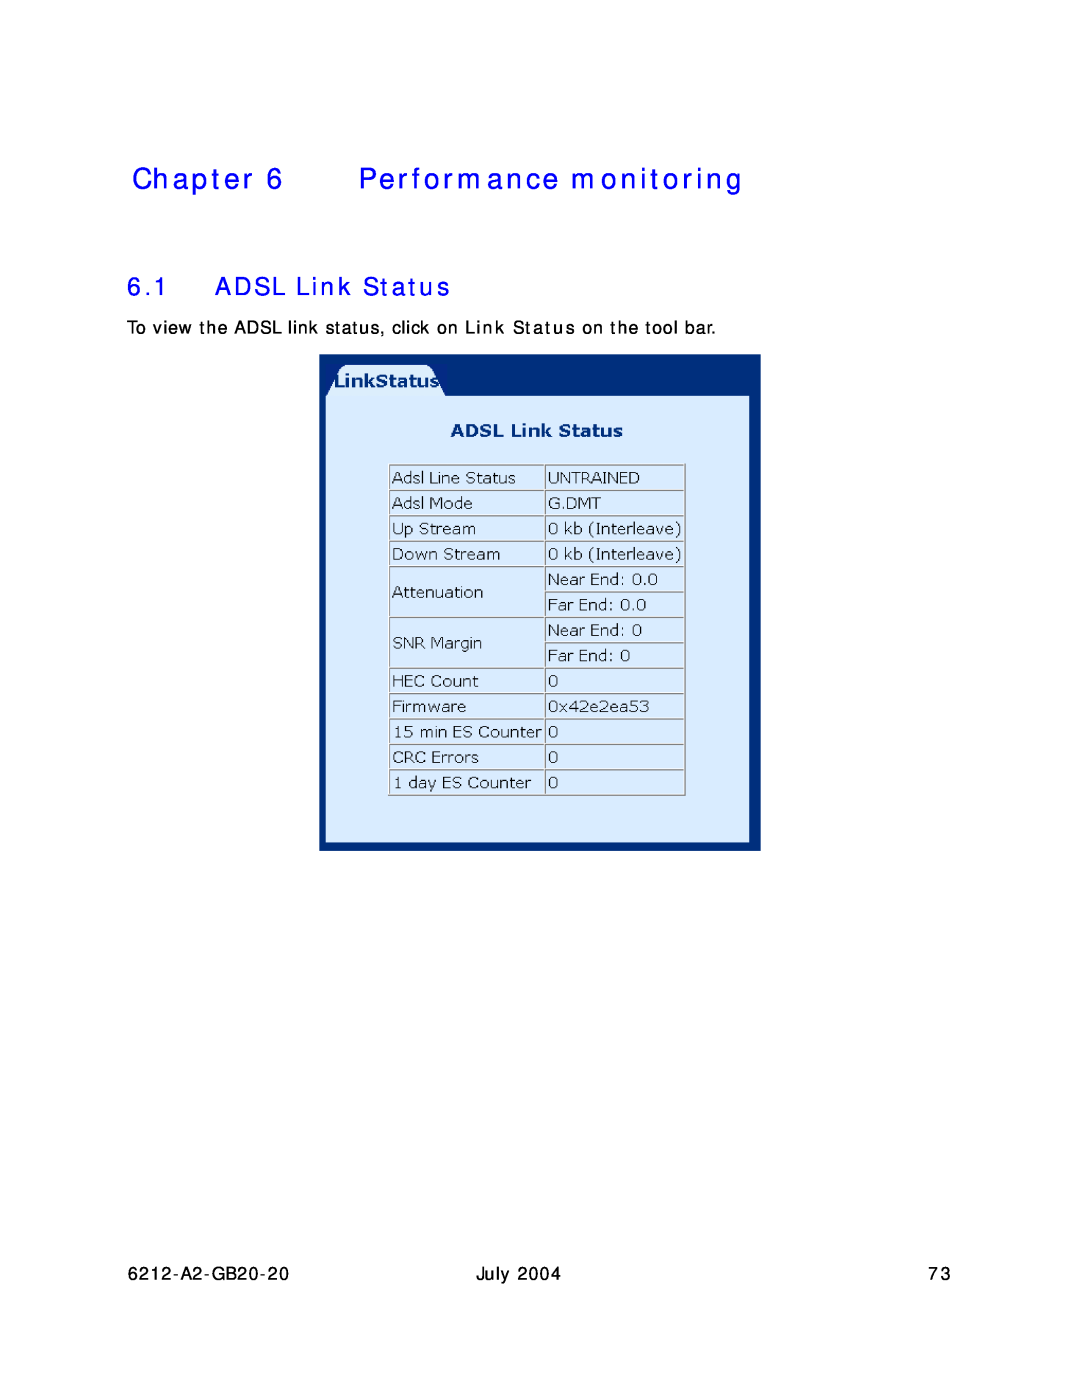 Paradyne 6212 manual Performance monitoring, ADSL Link Status 